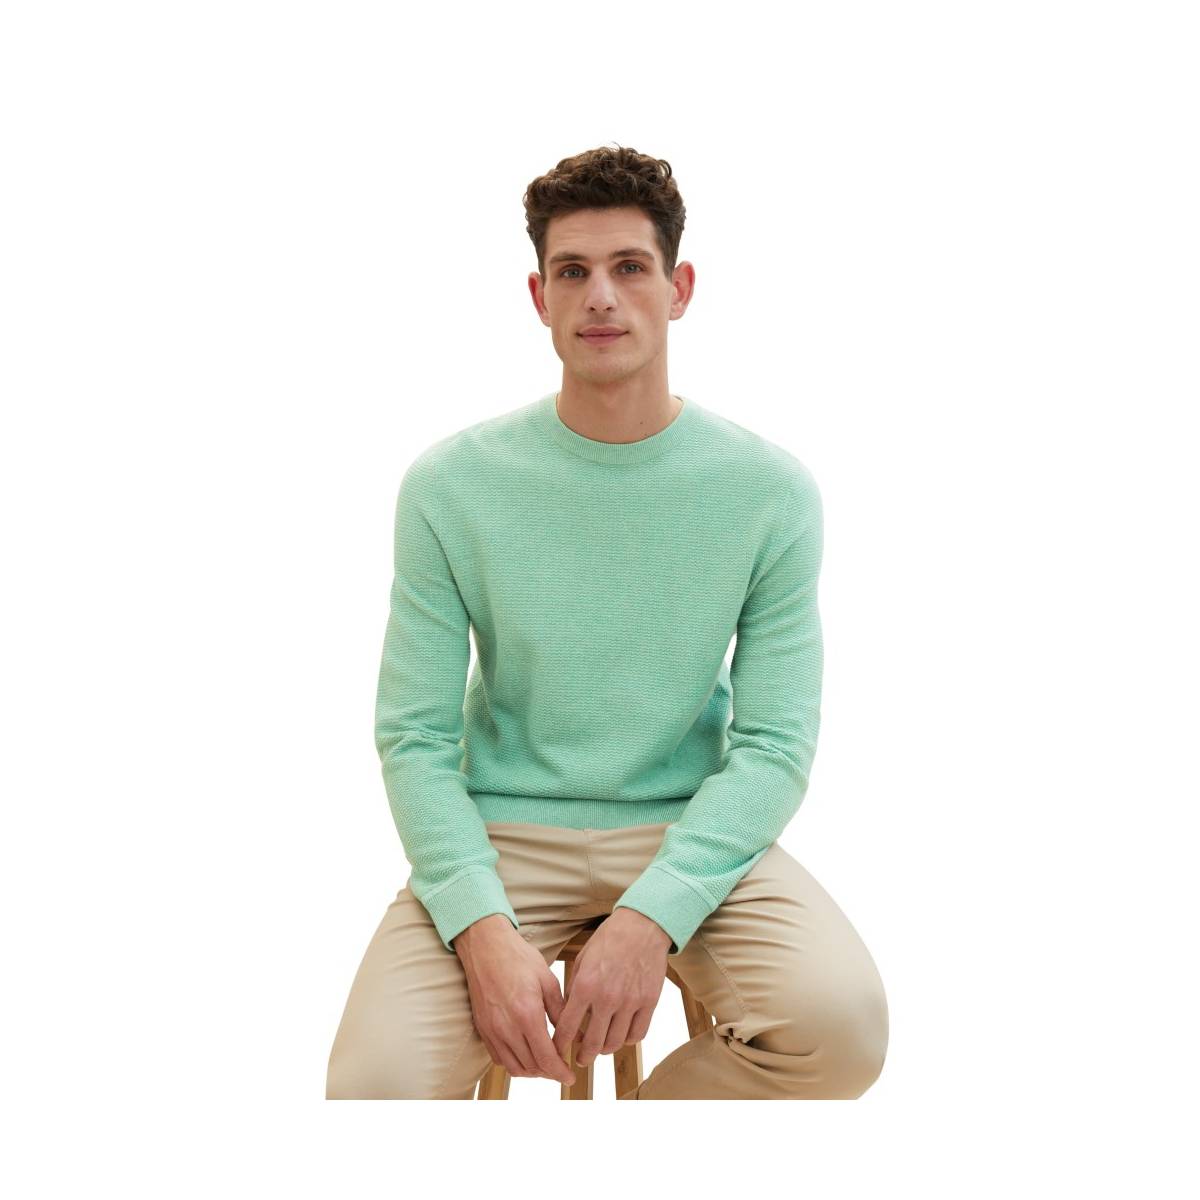 TOM TAILOR  tricot pull's en gilets licht groen/color -  model 1041186 - Herenkleding tricot pull's en gilets groen